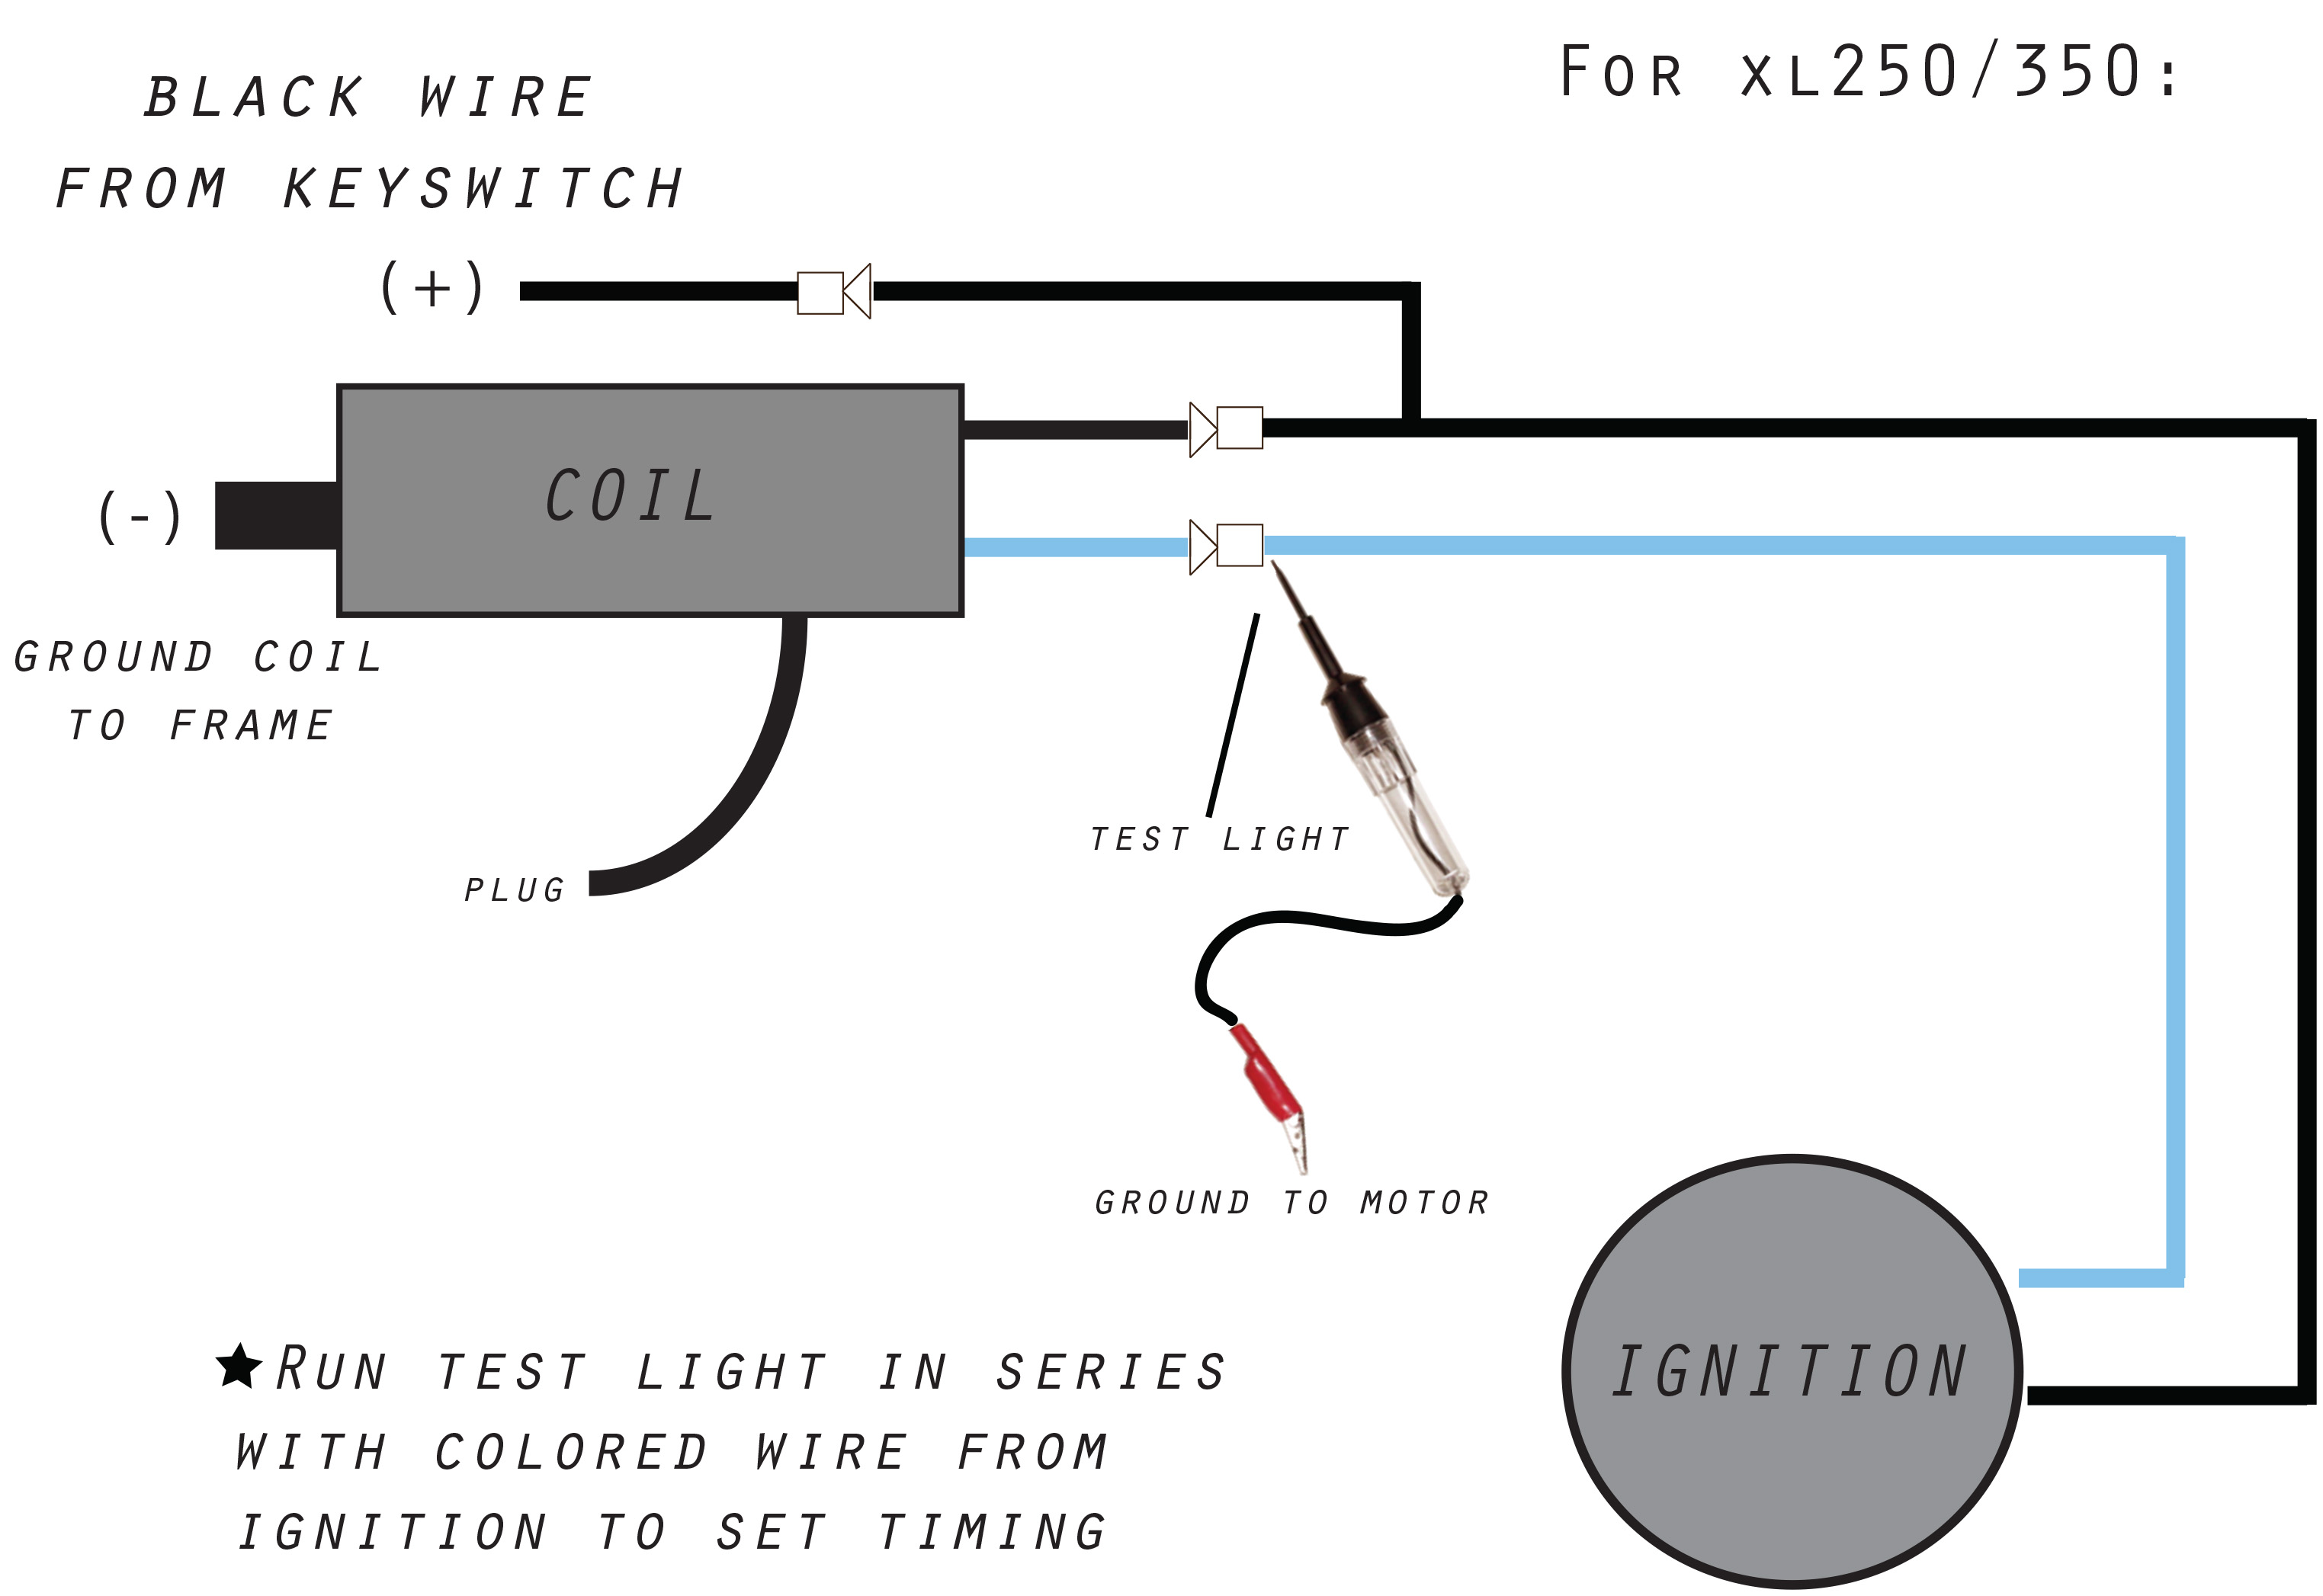 charlies-ignition-instructions-3.6-6v-90cc-coil.jpg